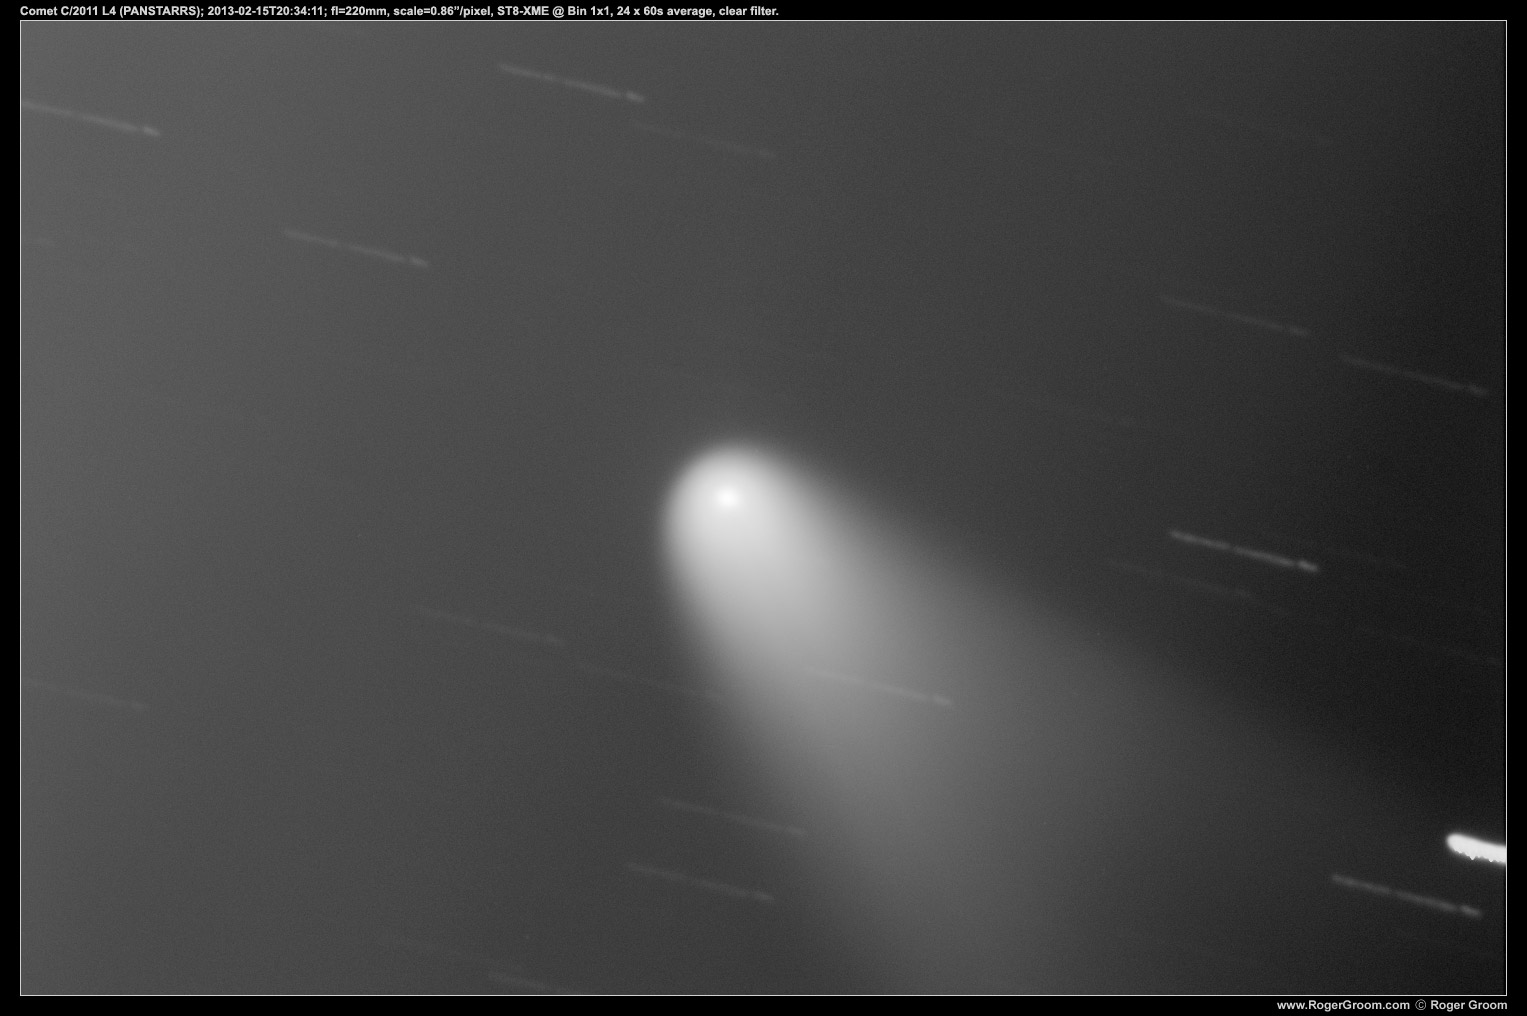 Comet C/2011 L4 (PANSTARRS); 2013-02-15T20:34:11; fl=220mm, scale=0.86”/pixel, ST8-XME @ Bin 1x1